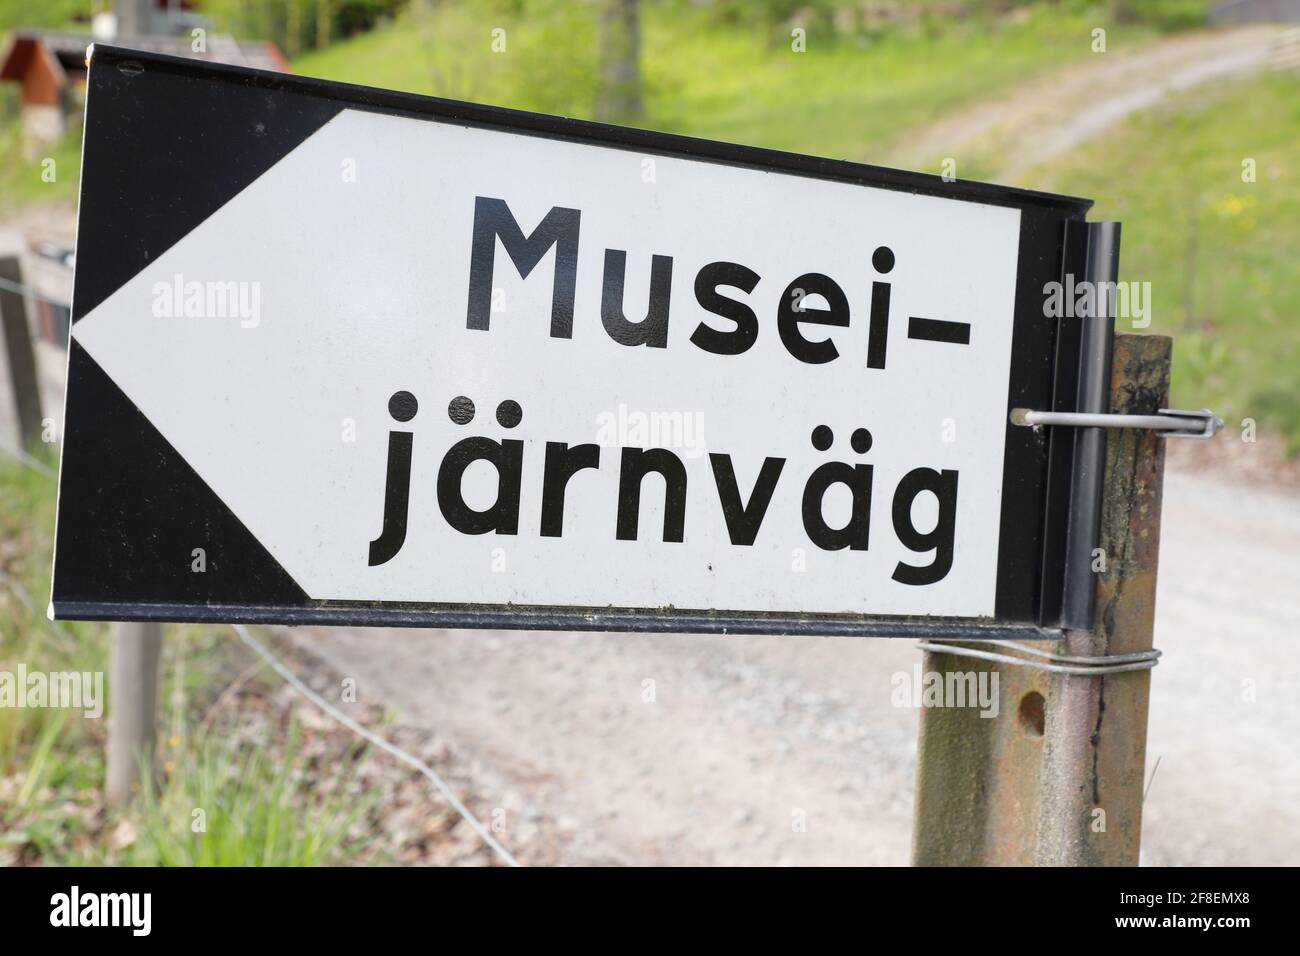 Railway used for heritage railway directional sign in Swedish. Stock Photo